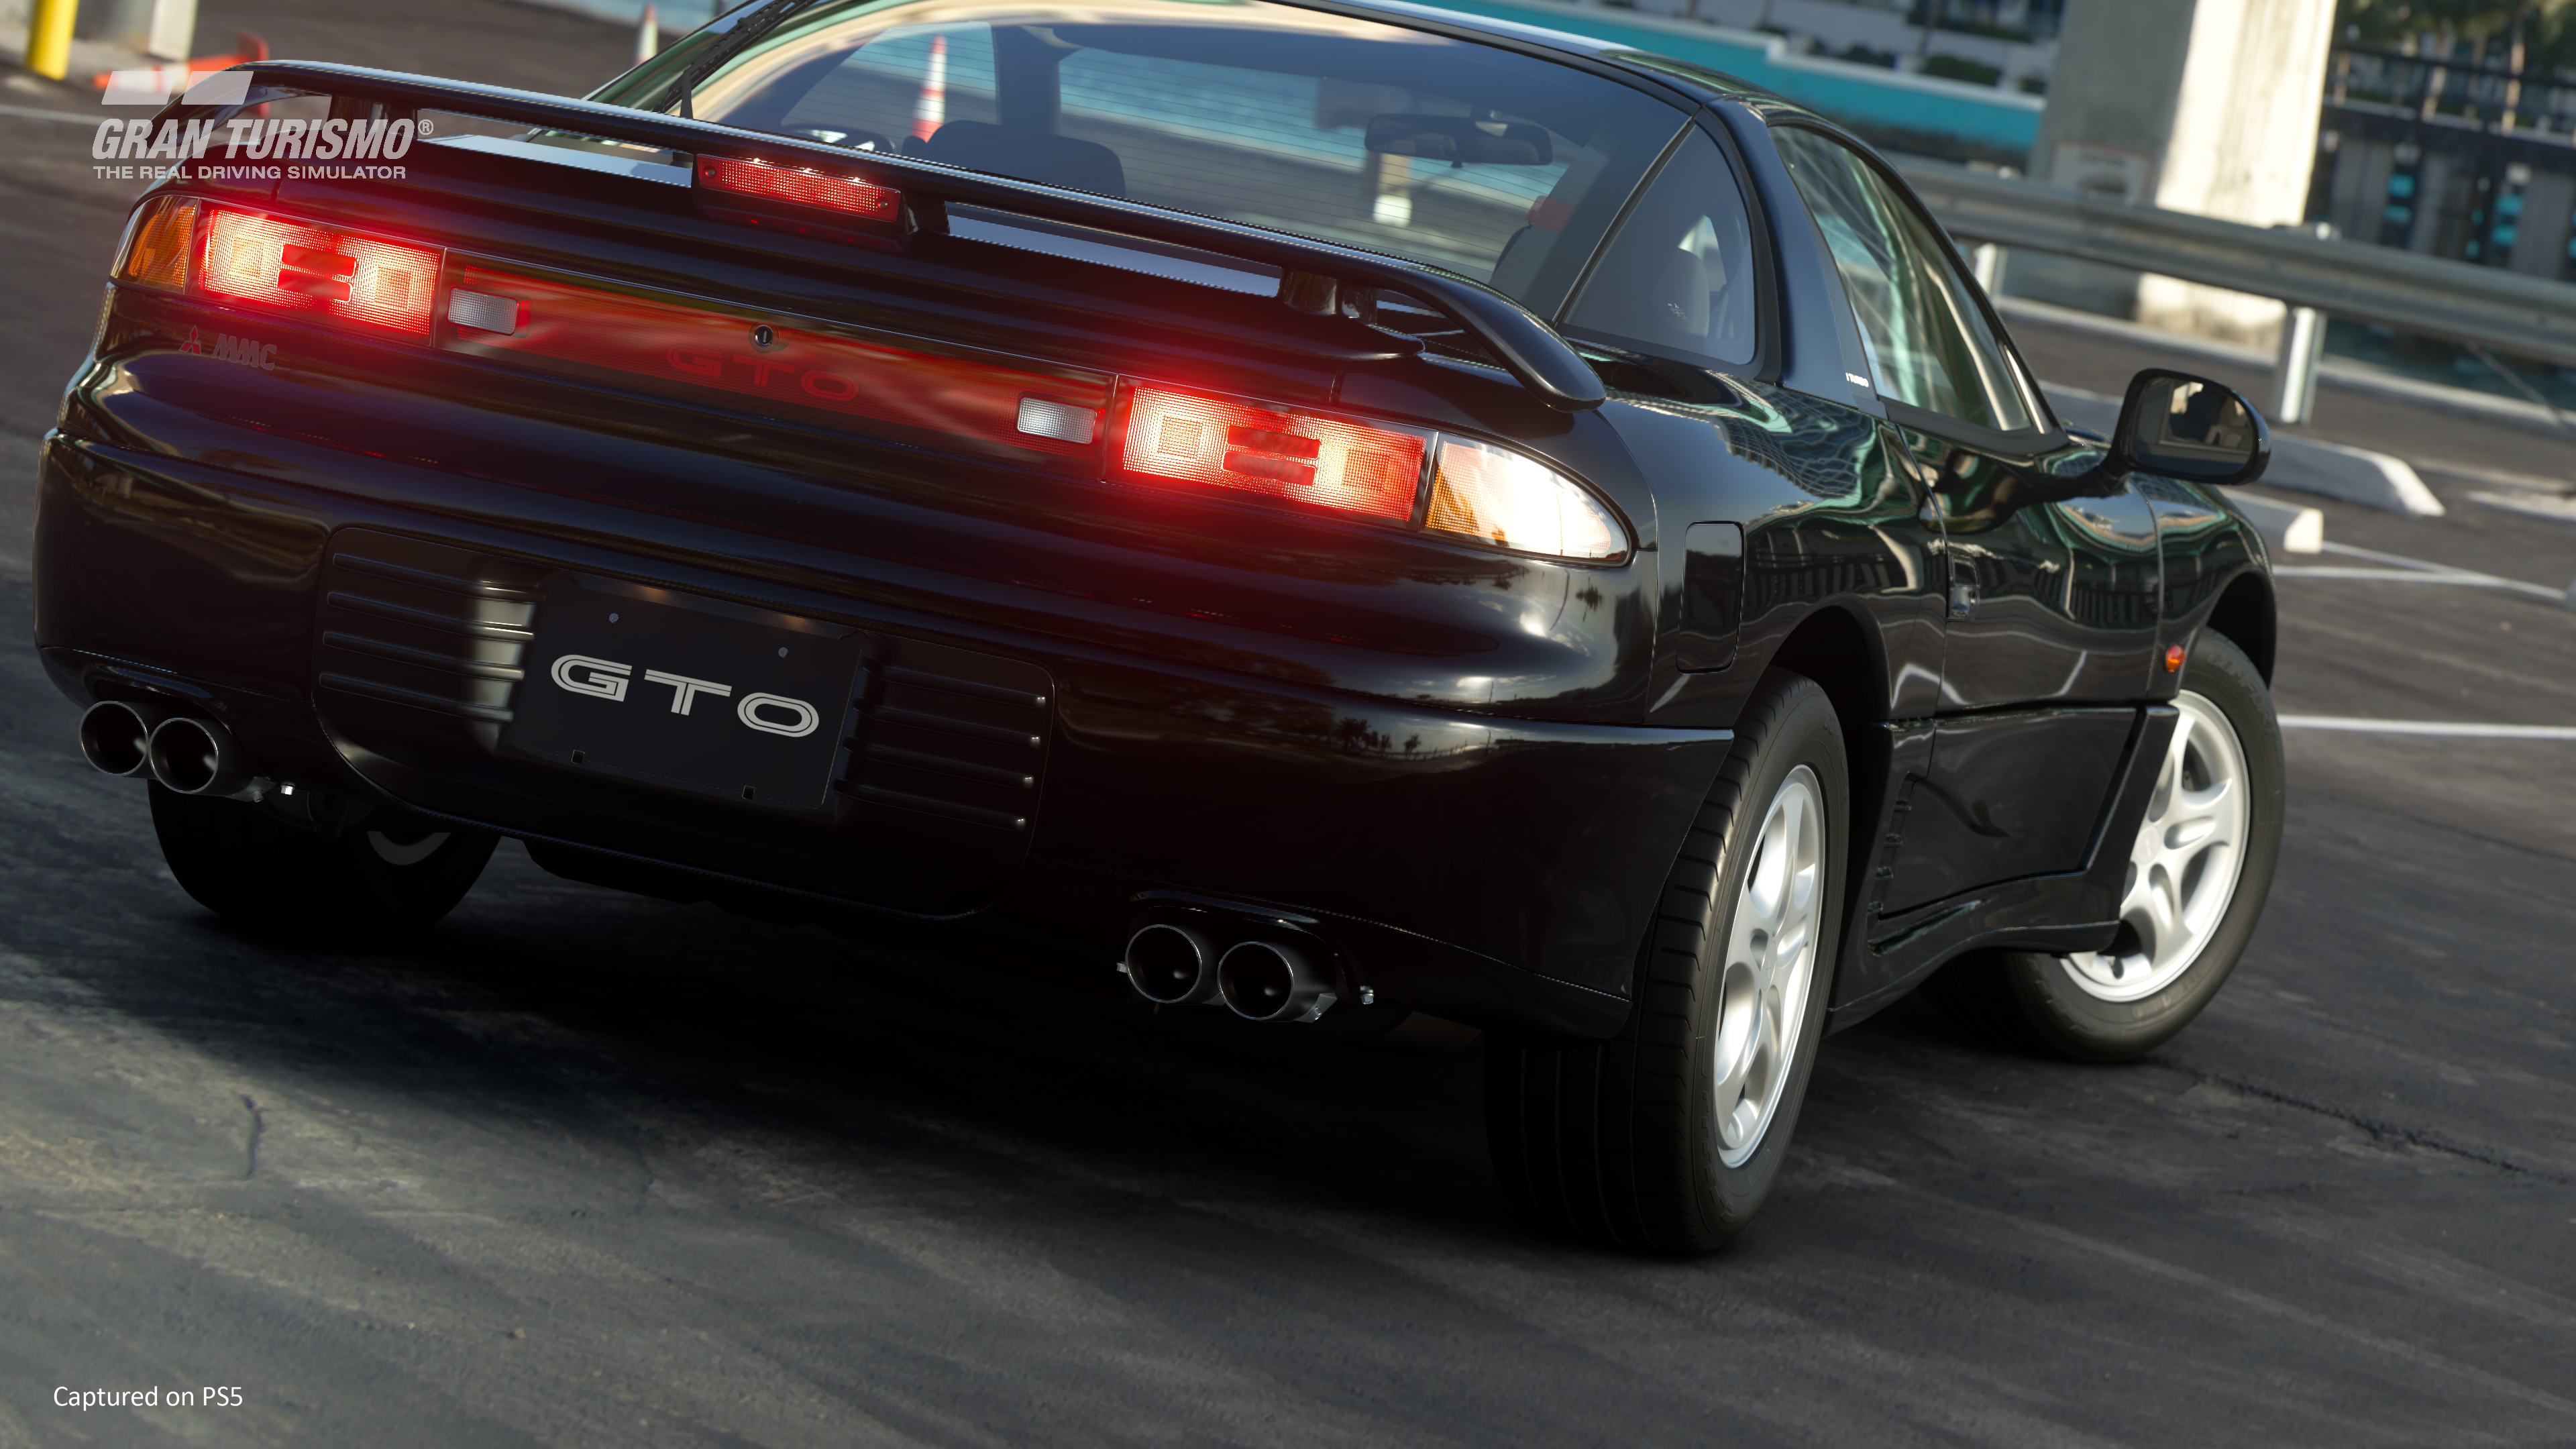 Gran Turismo 7 review: A triumphant return to form for